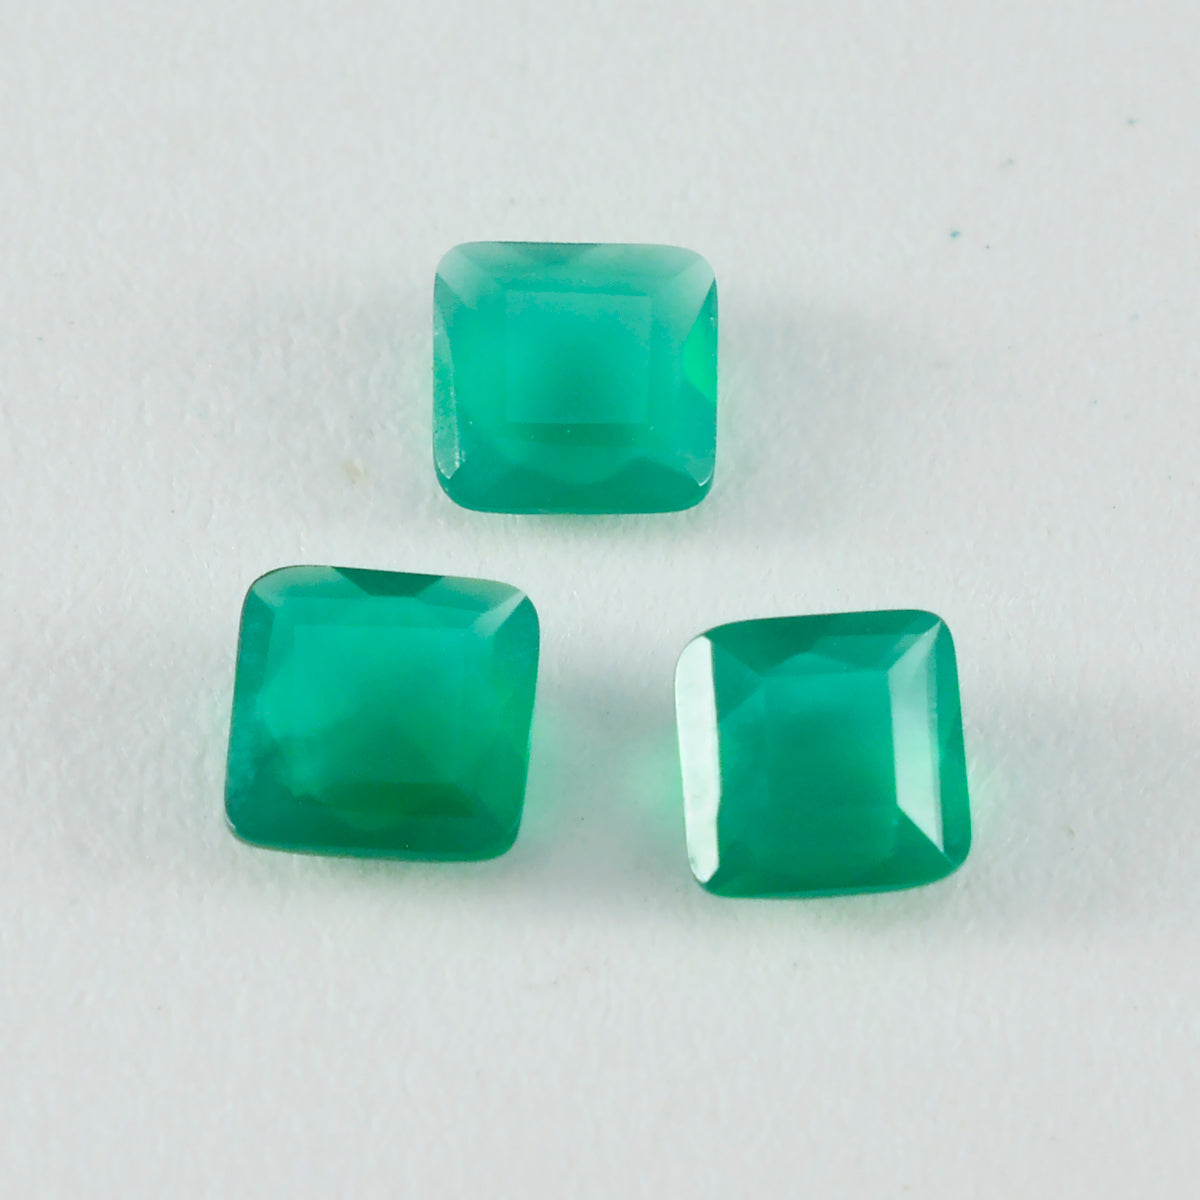 Riyogems 1PC Natural Green Jasper Faceted 12x12 mm Square Shape A Quality Loose Gemstone